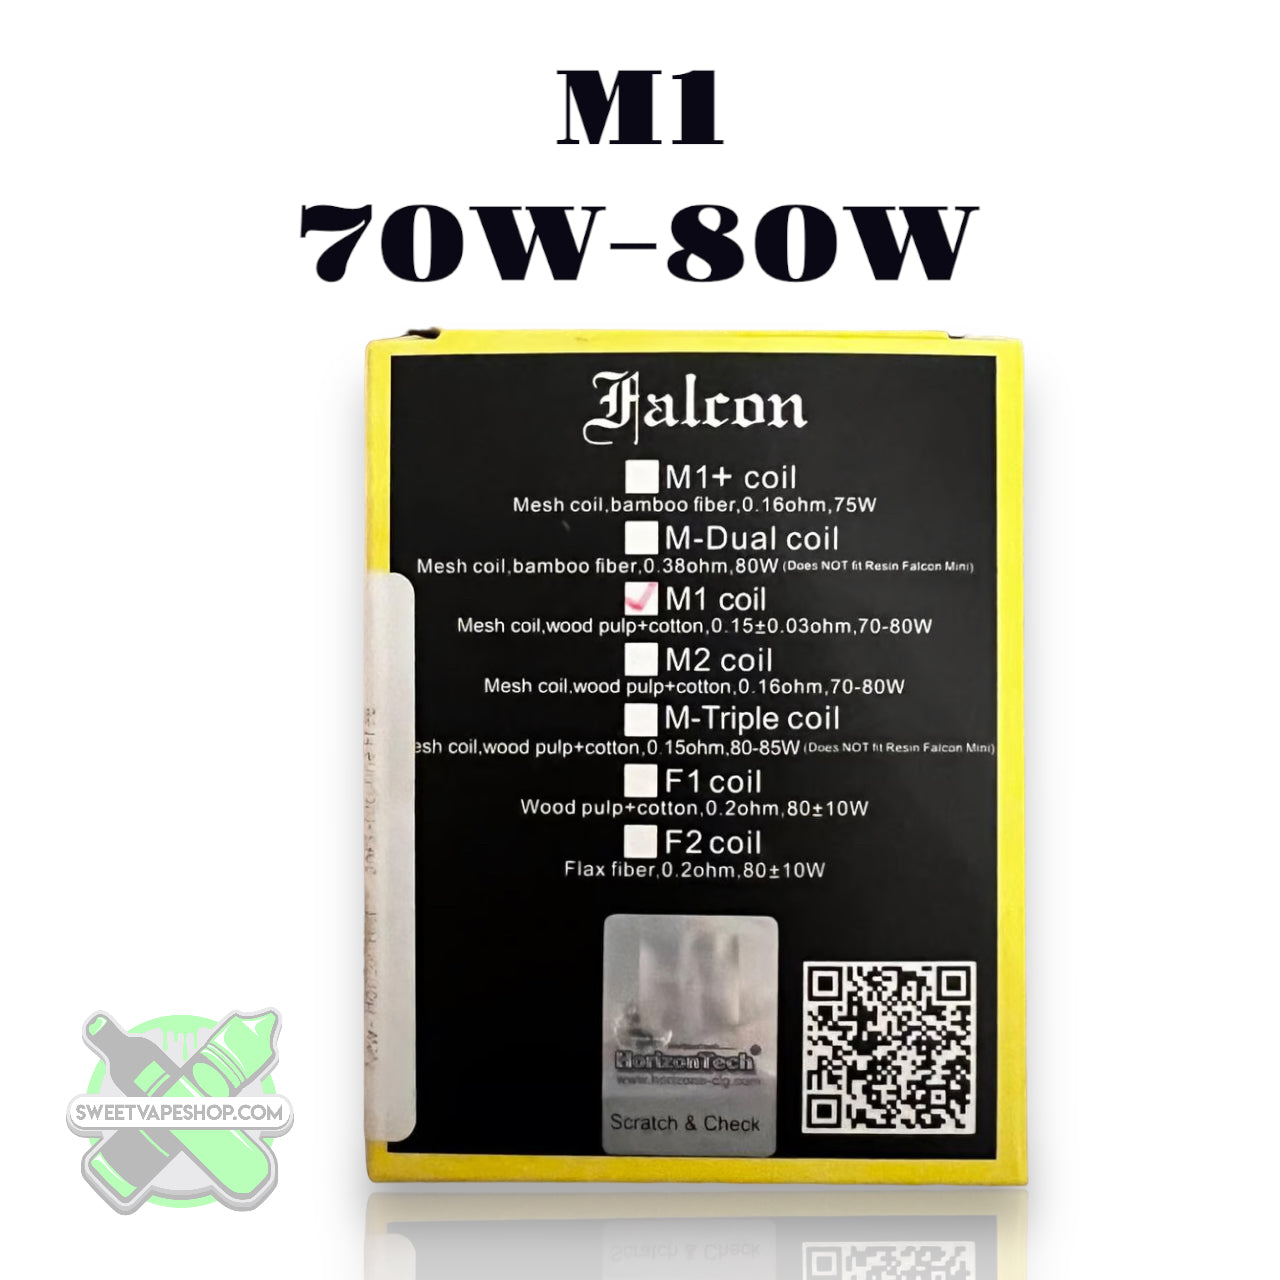 Horizon Tech - Falcon Coils 3-Pack